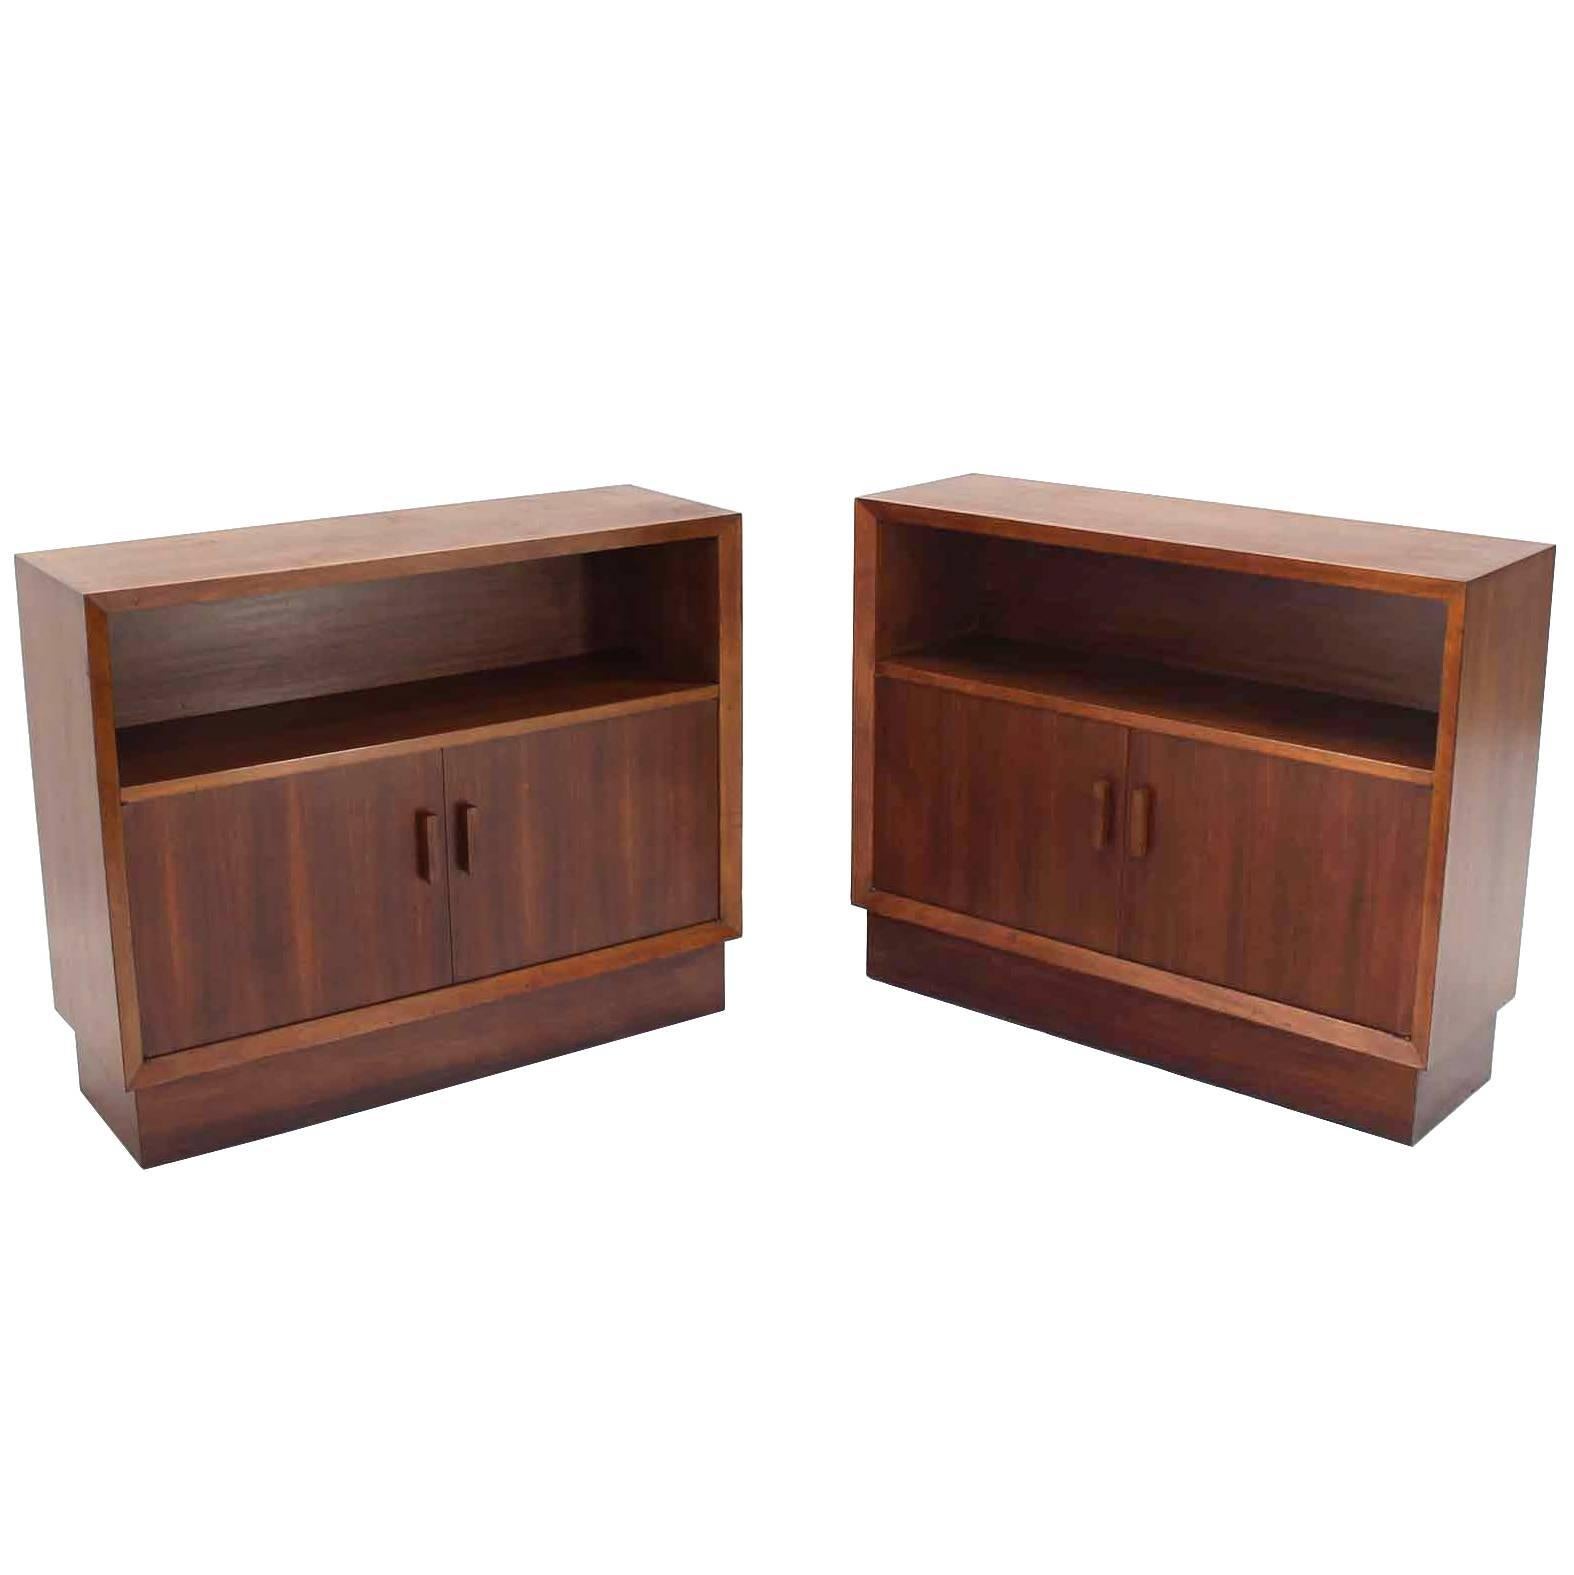 Pair of Walnut Two-Door Credenzas or Cabinets